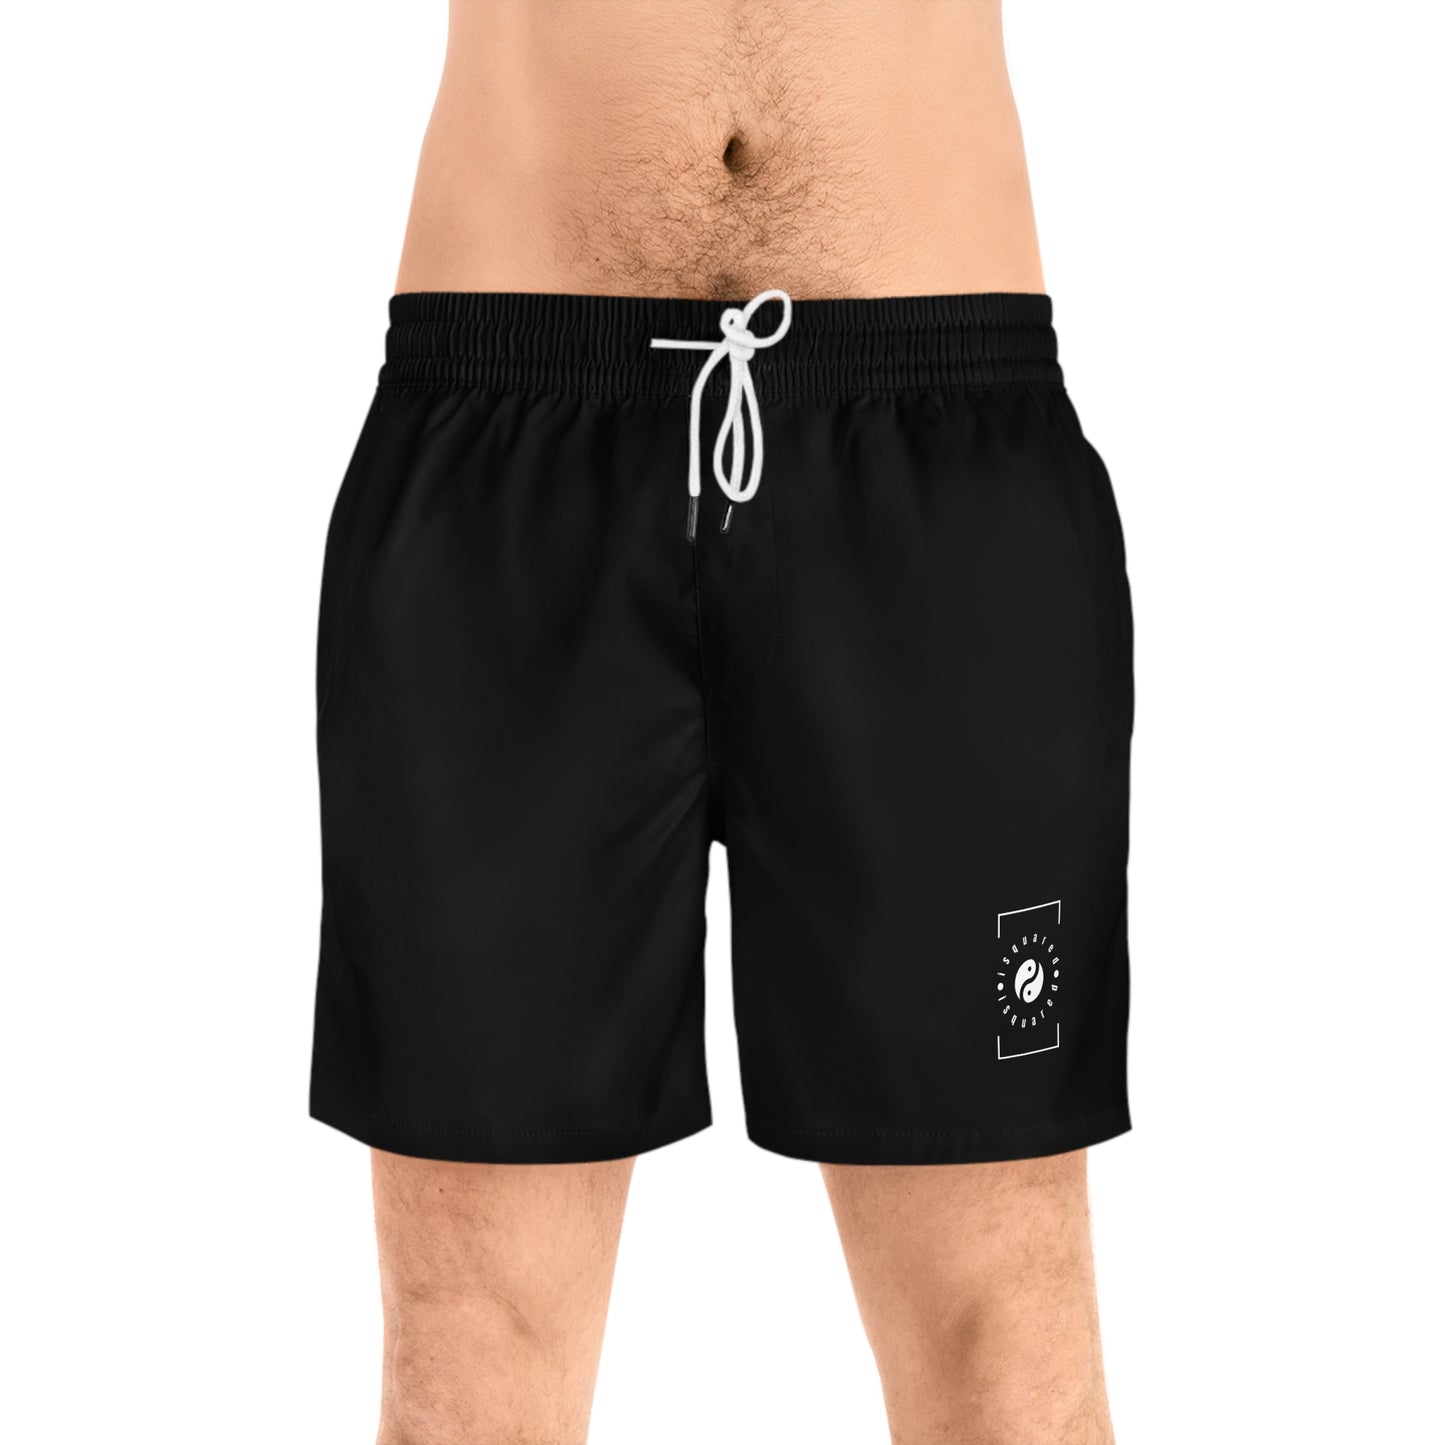 Pure Black - Swim Shorts (Solid Color) for Men